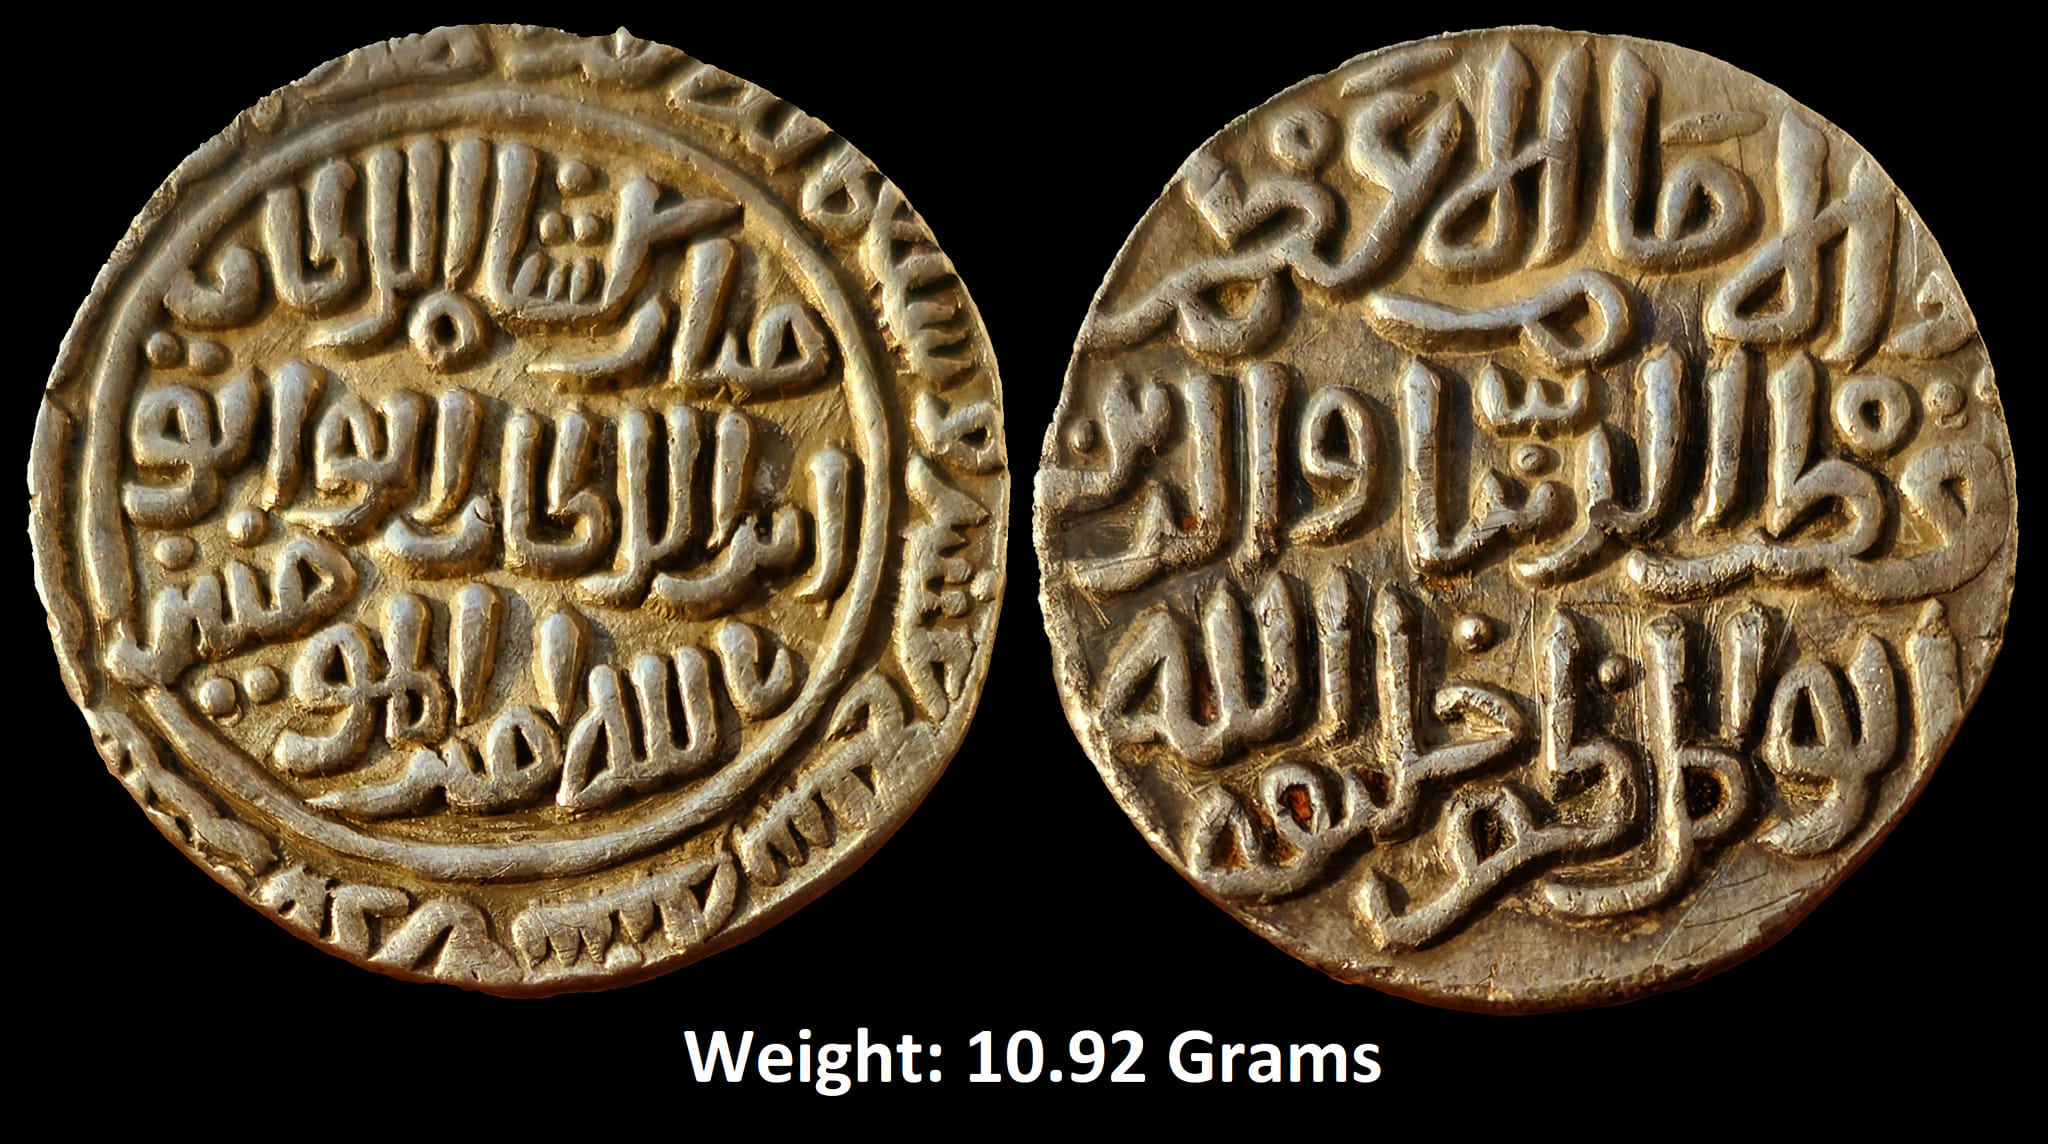 Delhi Sultan ; Qutub Al Din Mubarak Shah ;
Ex Rare Silver Rupee ; Mint : Qila Qutbabad
Weight : 10.92 Grams
Obverse : Al Sultan ibn Al-Sultan Al Wathia Billah Amir Al-Mu'minin, Qila Qutbabad, and AH 718.
Reverse : Al Imam Al Azam Al-Alamin Qutb Al-Dunya Wa'din Abul Muzaffar Mubarak Shah
Note : Qila QutQila Qutbabad in round shape is harder to find and much rarer than square type of Qutub-ud Din Mubarak Shah .